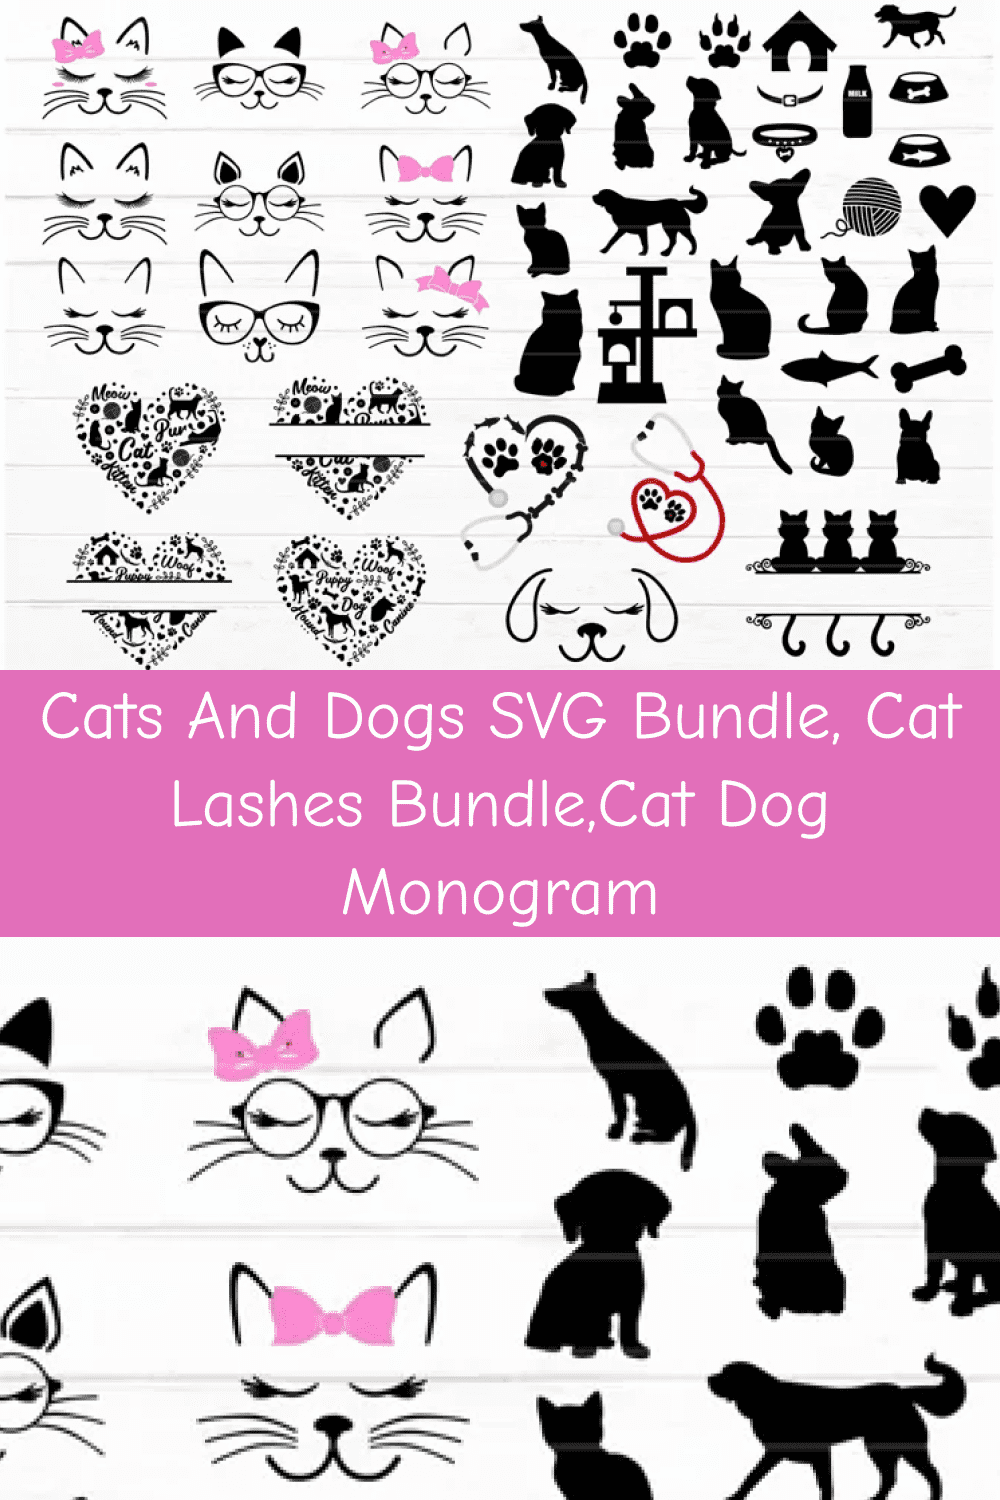 Cats and Dogs SVG Bundle, Cat Lashes Bundle, Cat Dog Monogram.